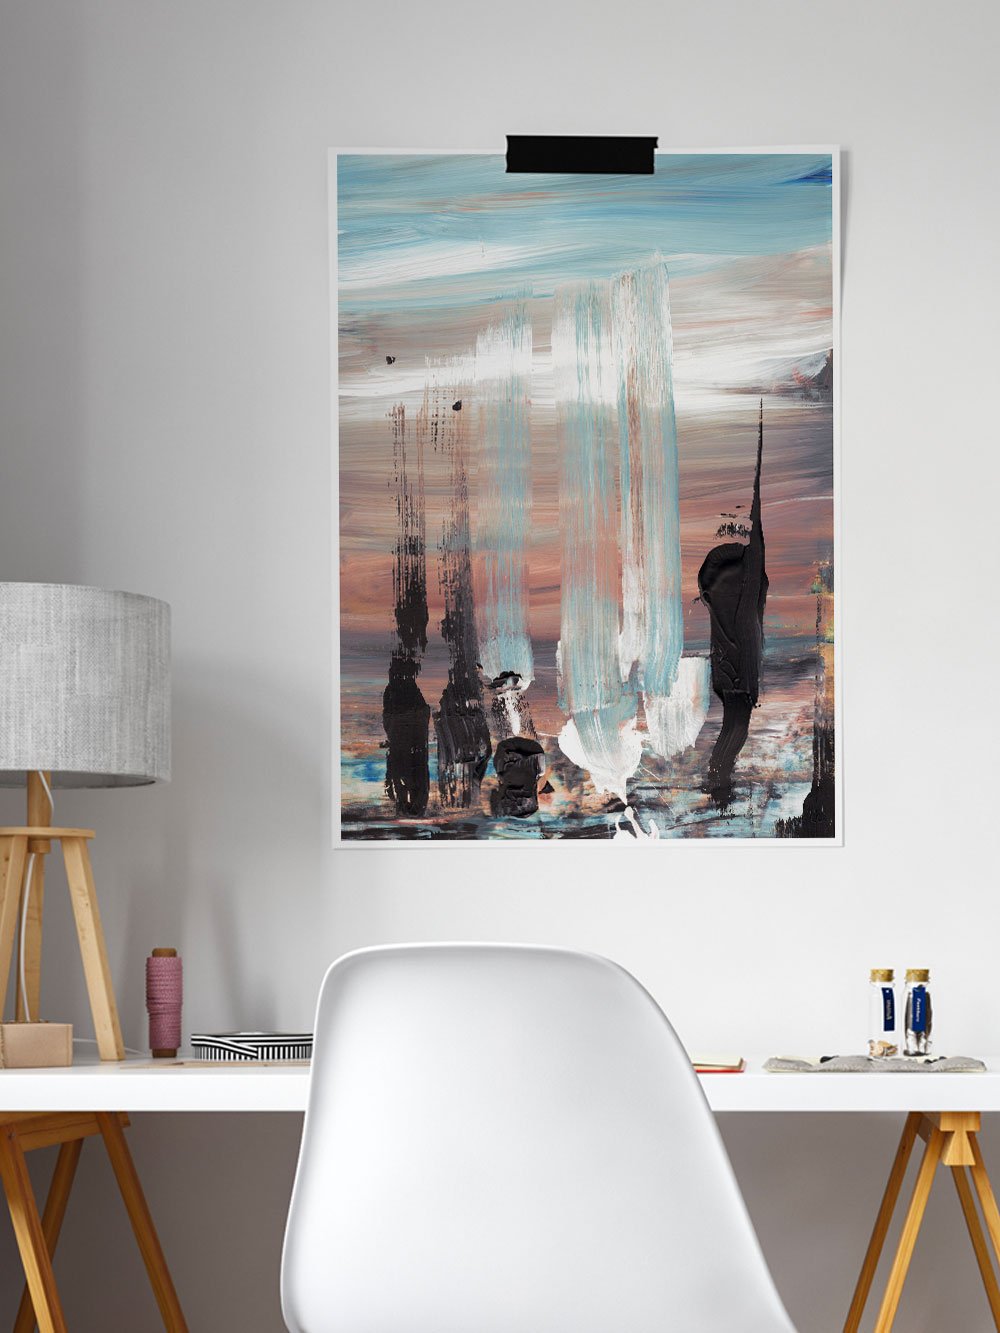 Koyo Beach Impression Painting in a modern room interior